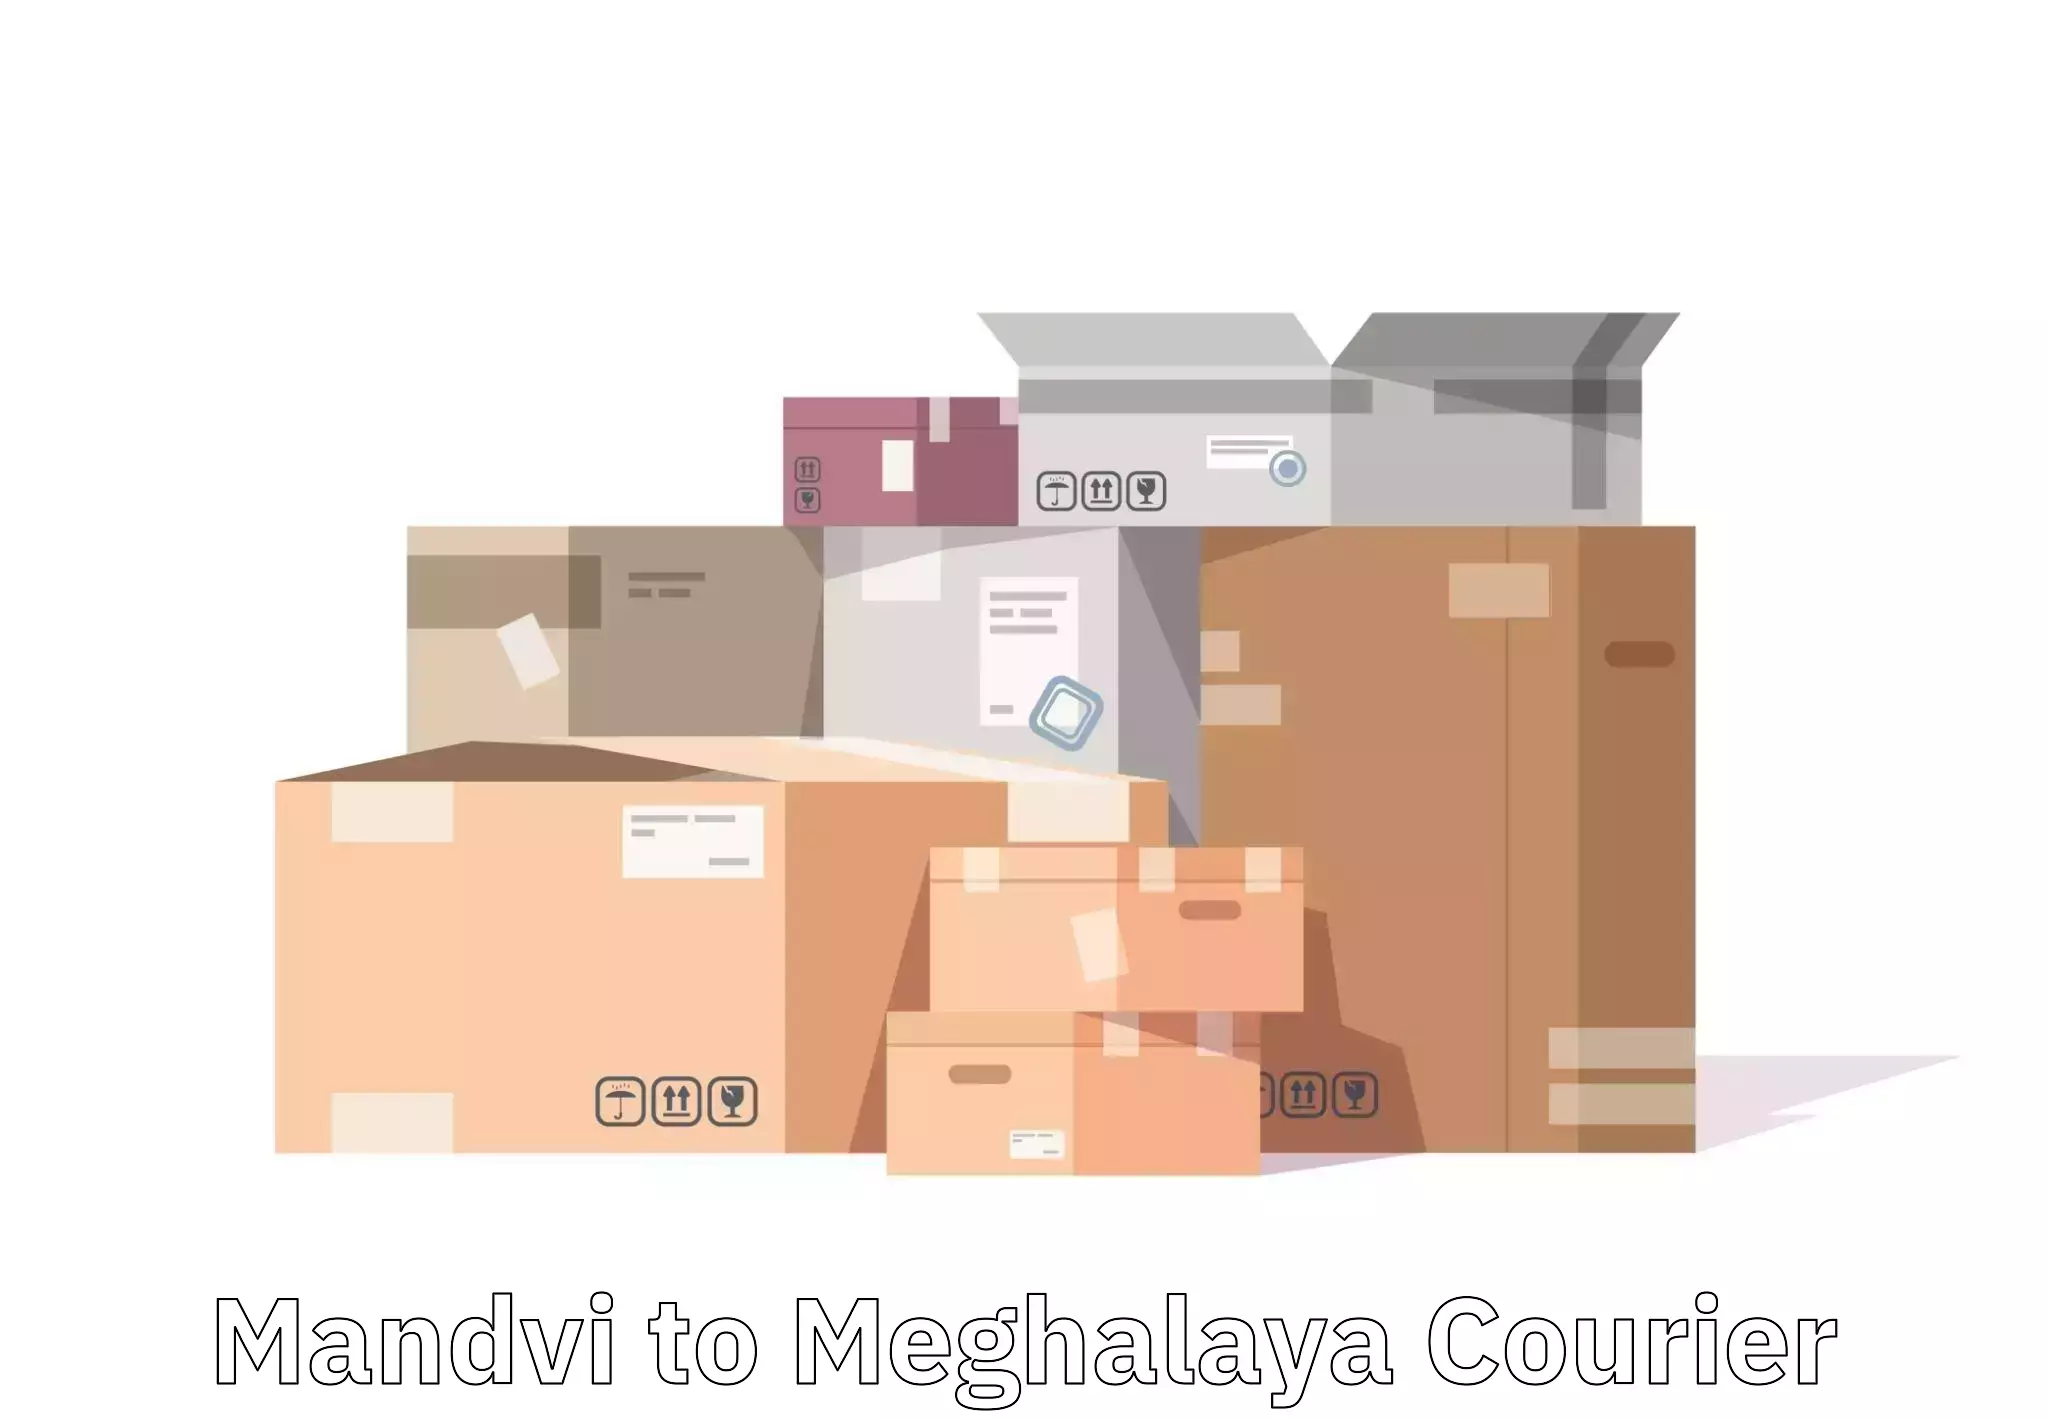 Door-to-door baggage service Mandvi to Shillong